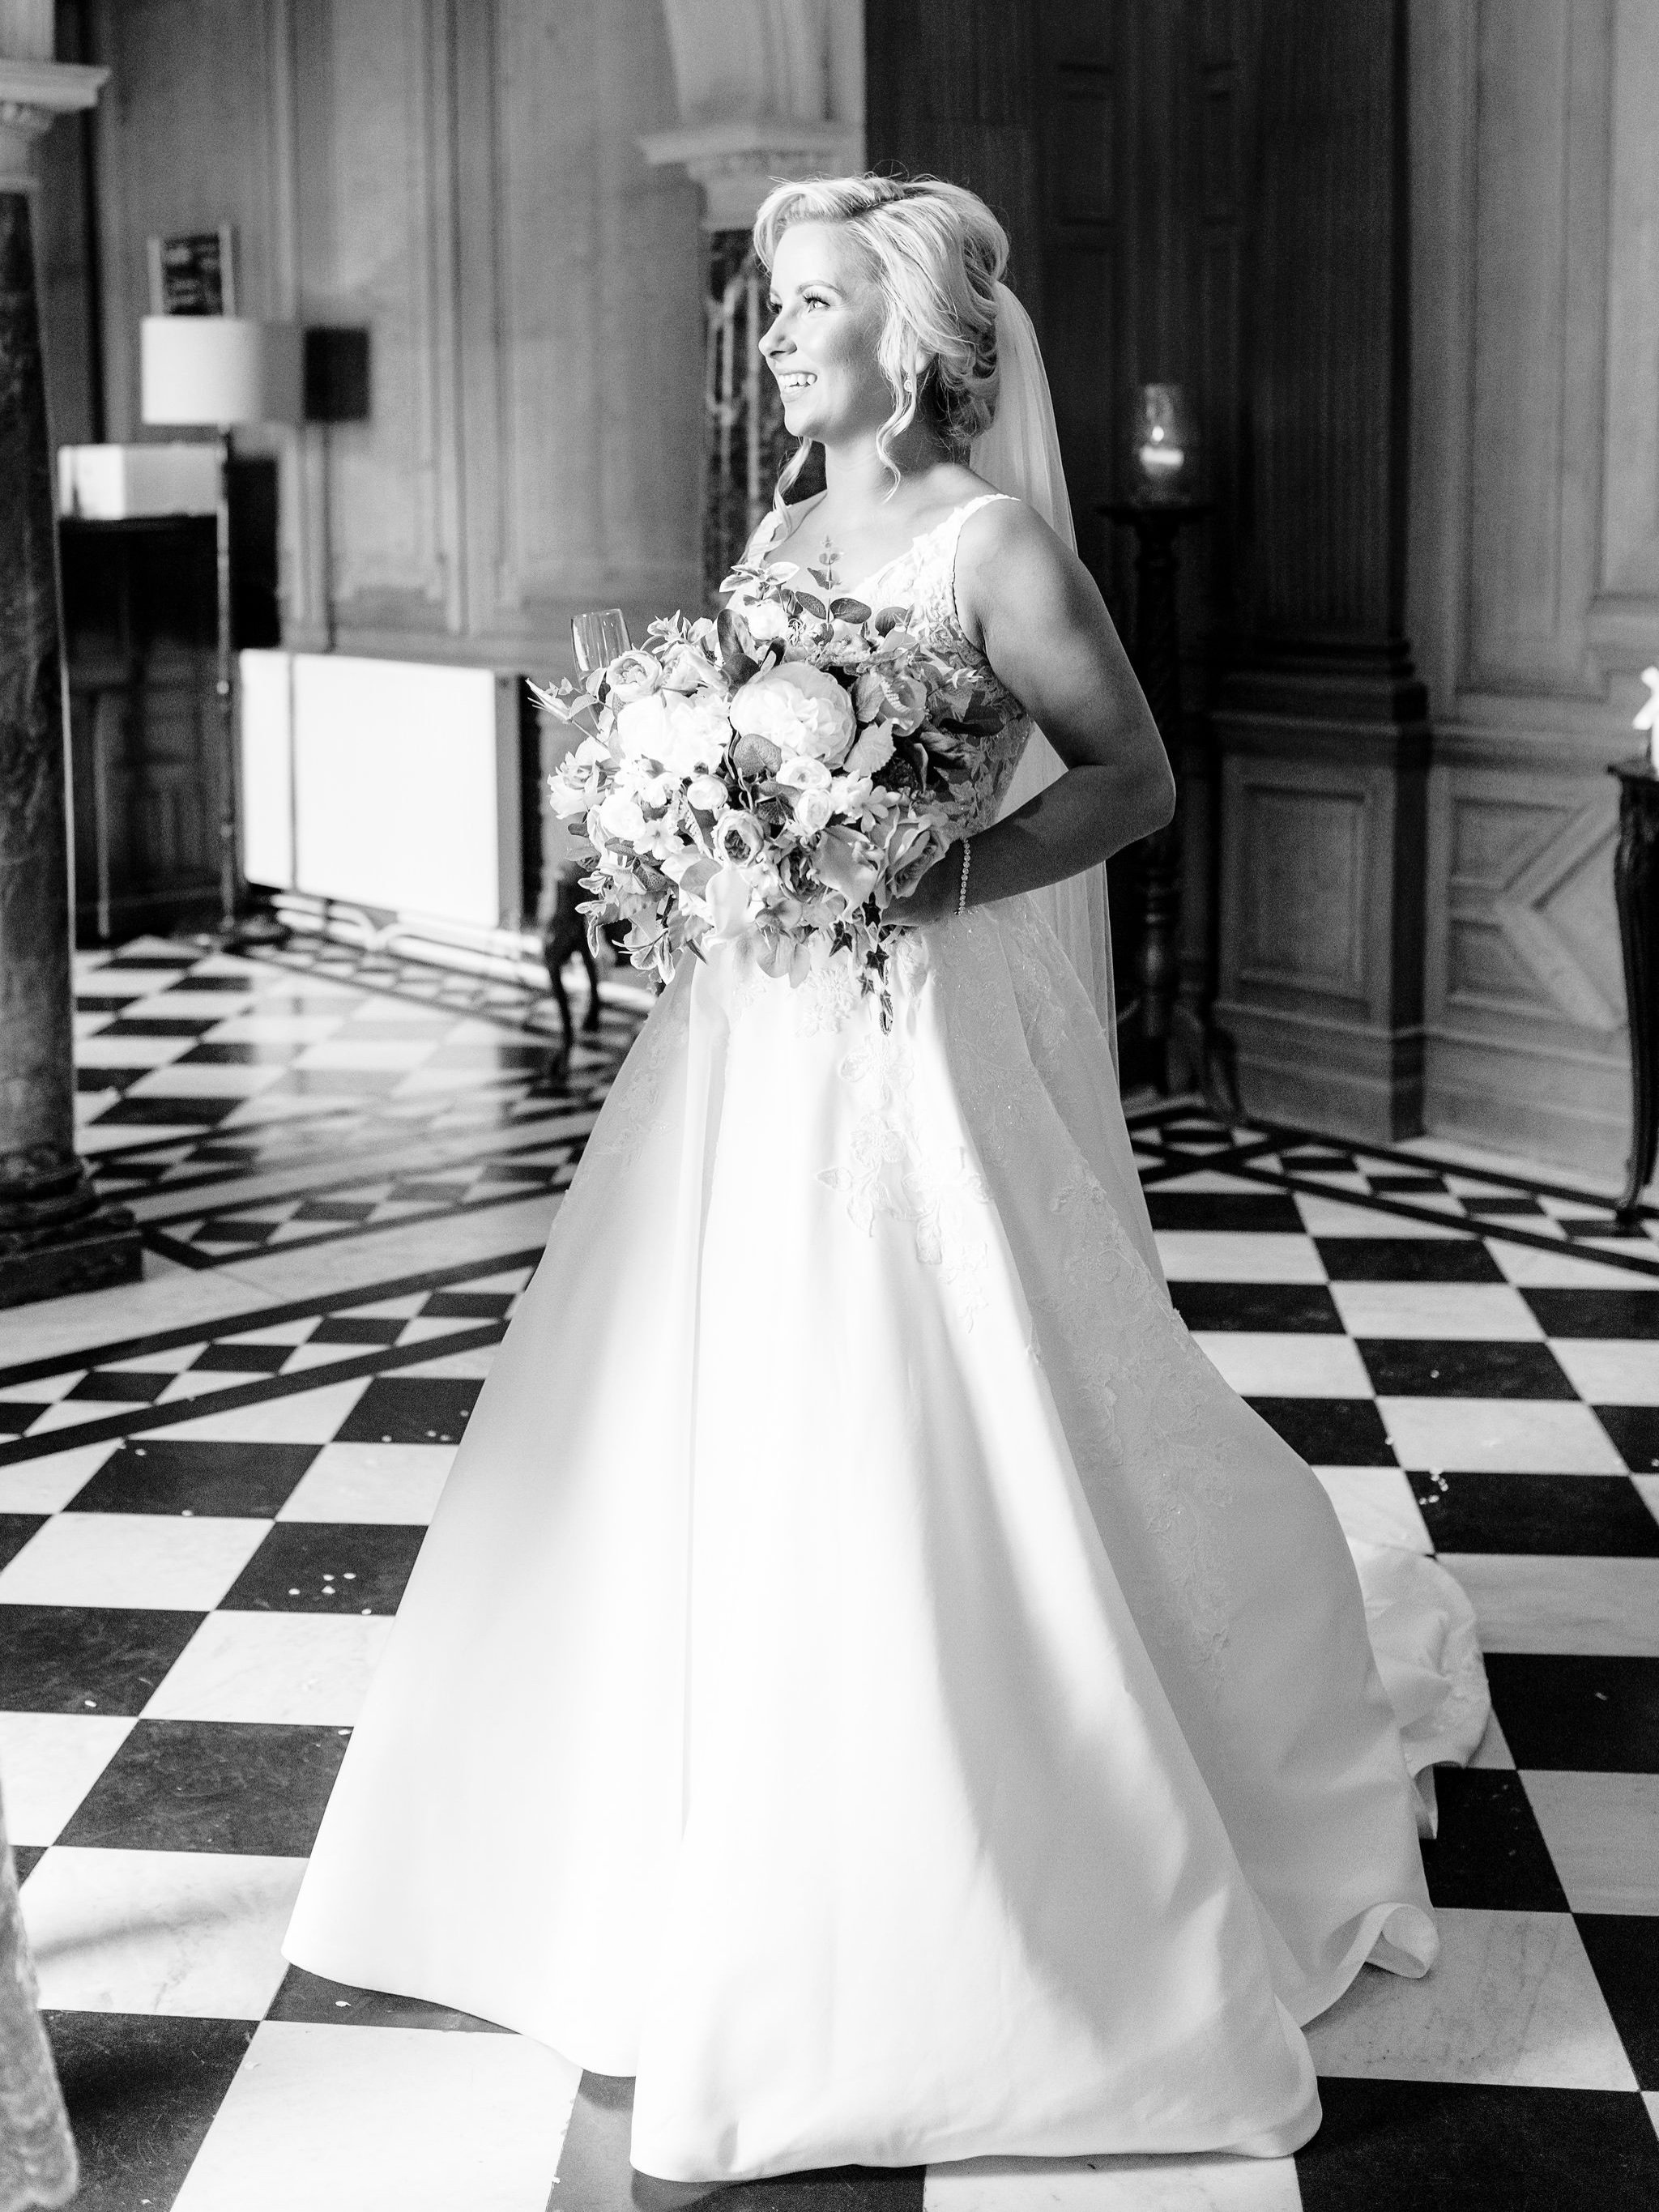 44_springkell-house-wedding-photographer-dumfries-scotland-bride-at-reception.jpg